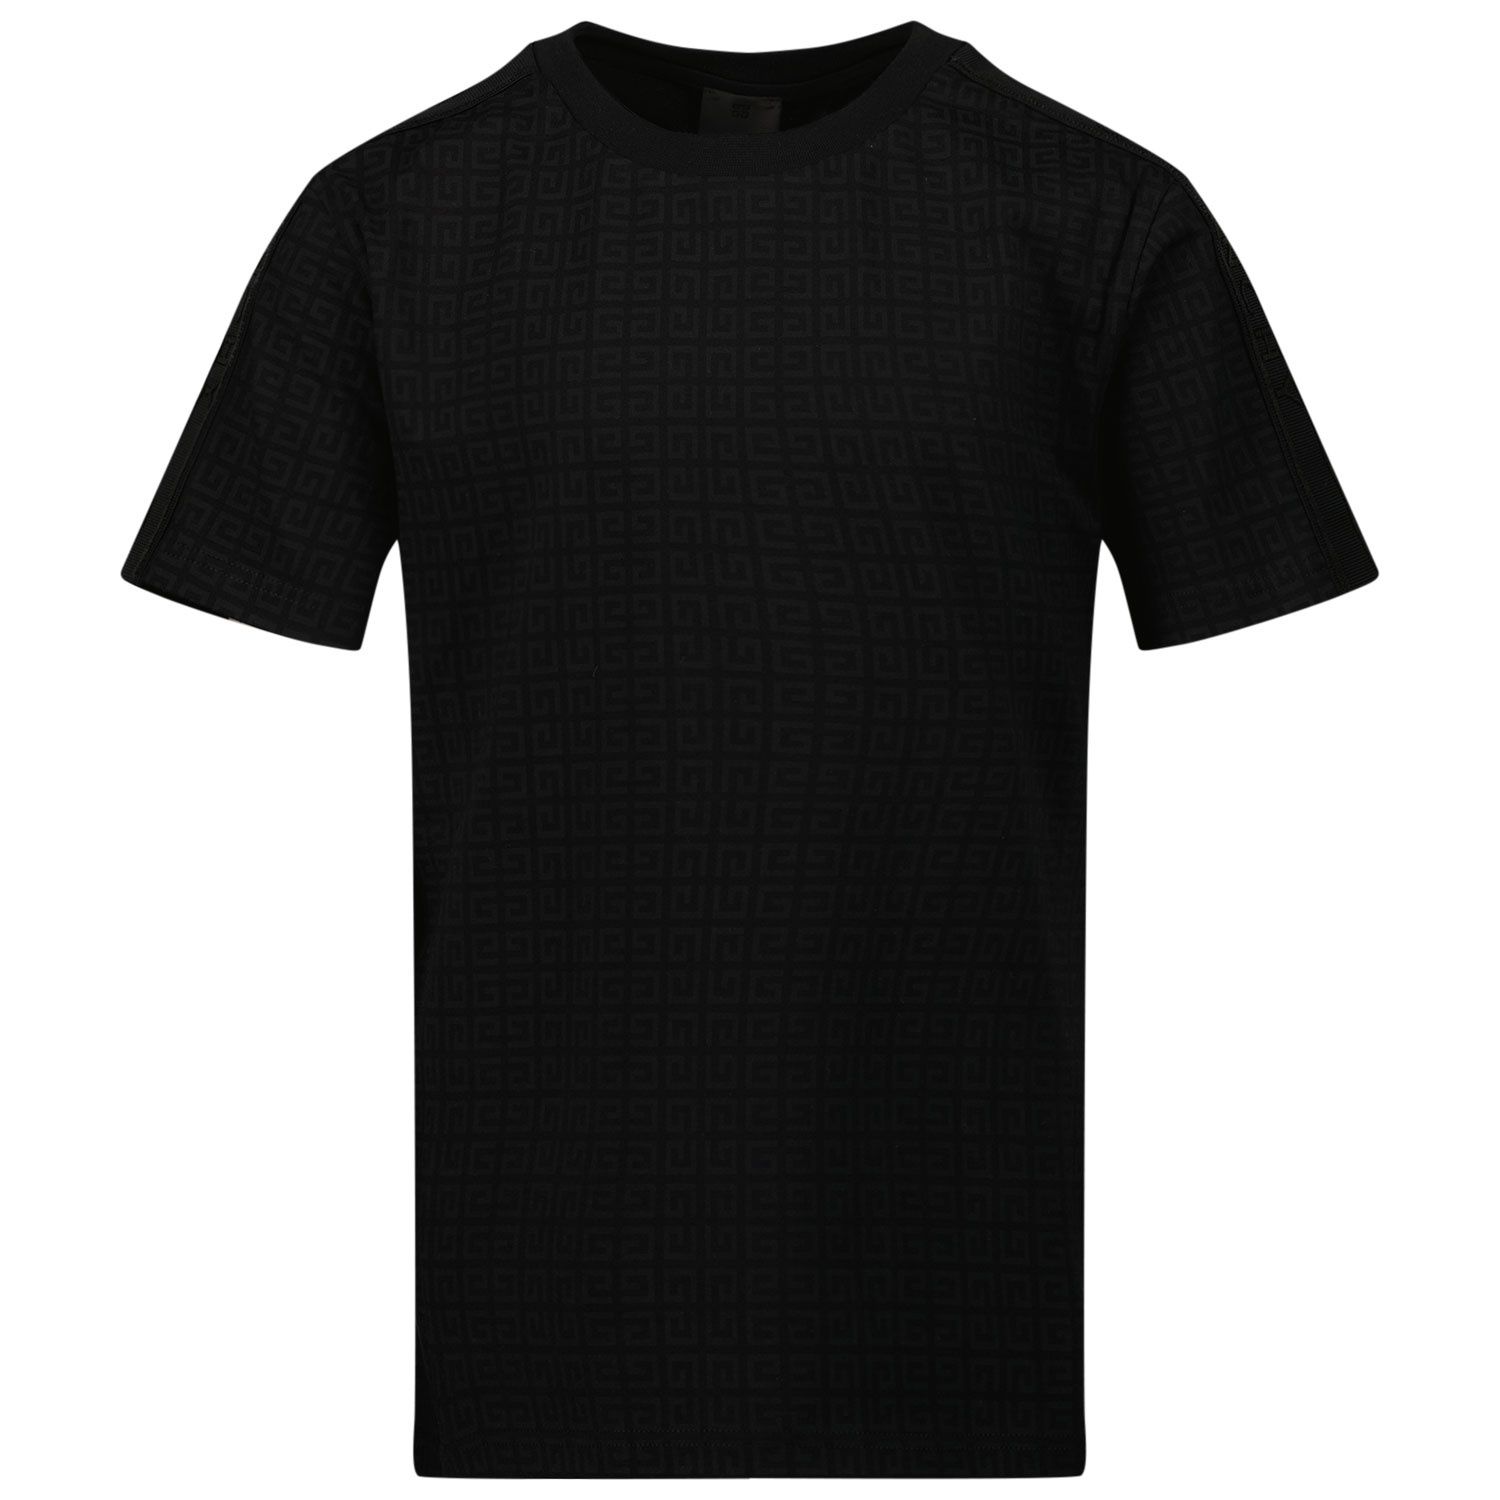 Afbeelding van Givenchy H25337 kinder t-shirt zwart